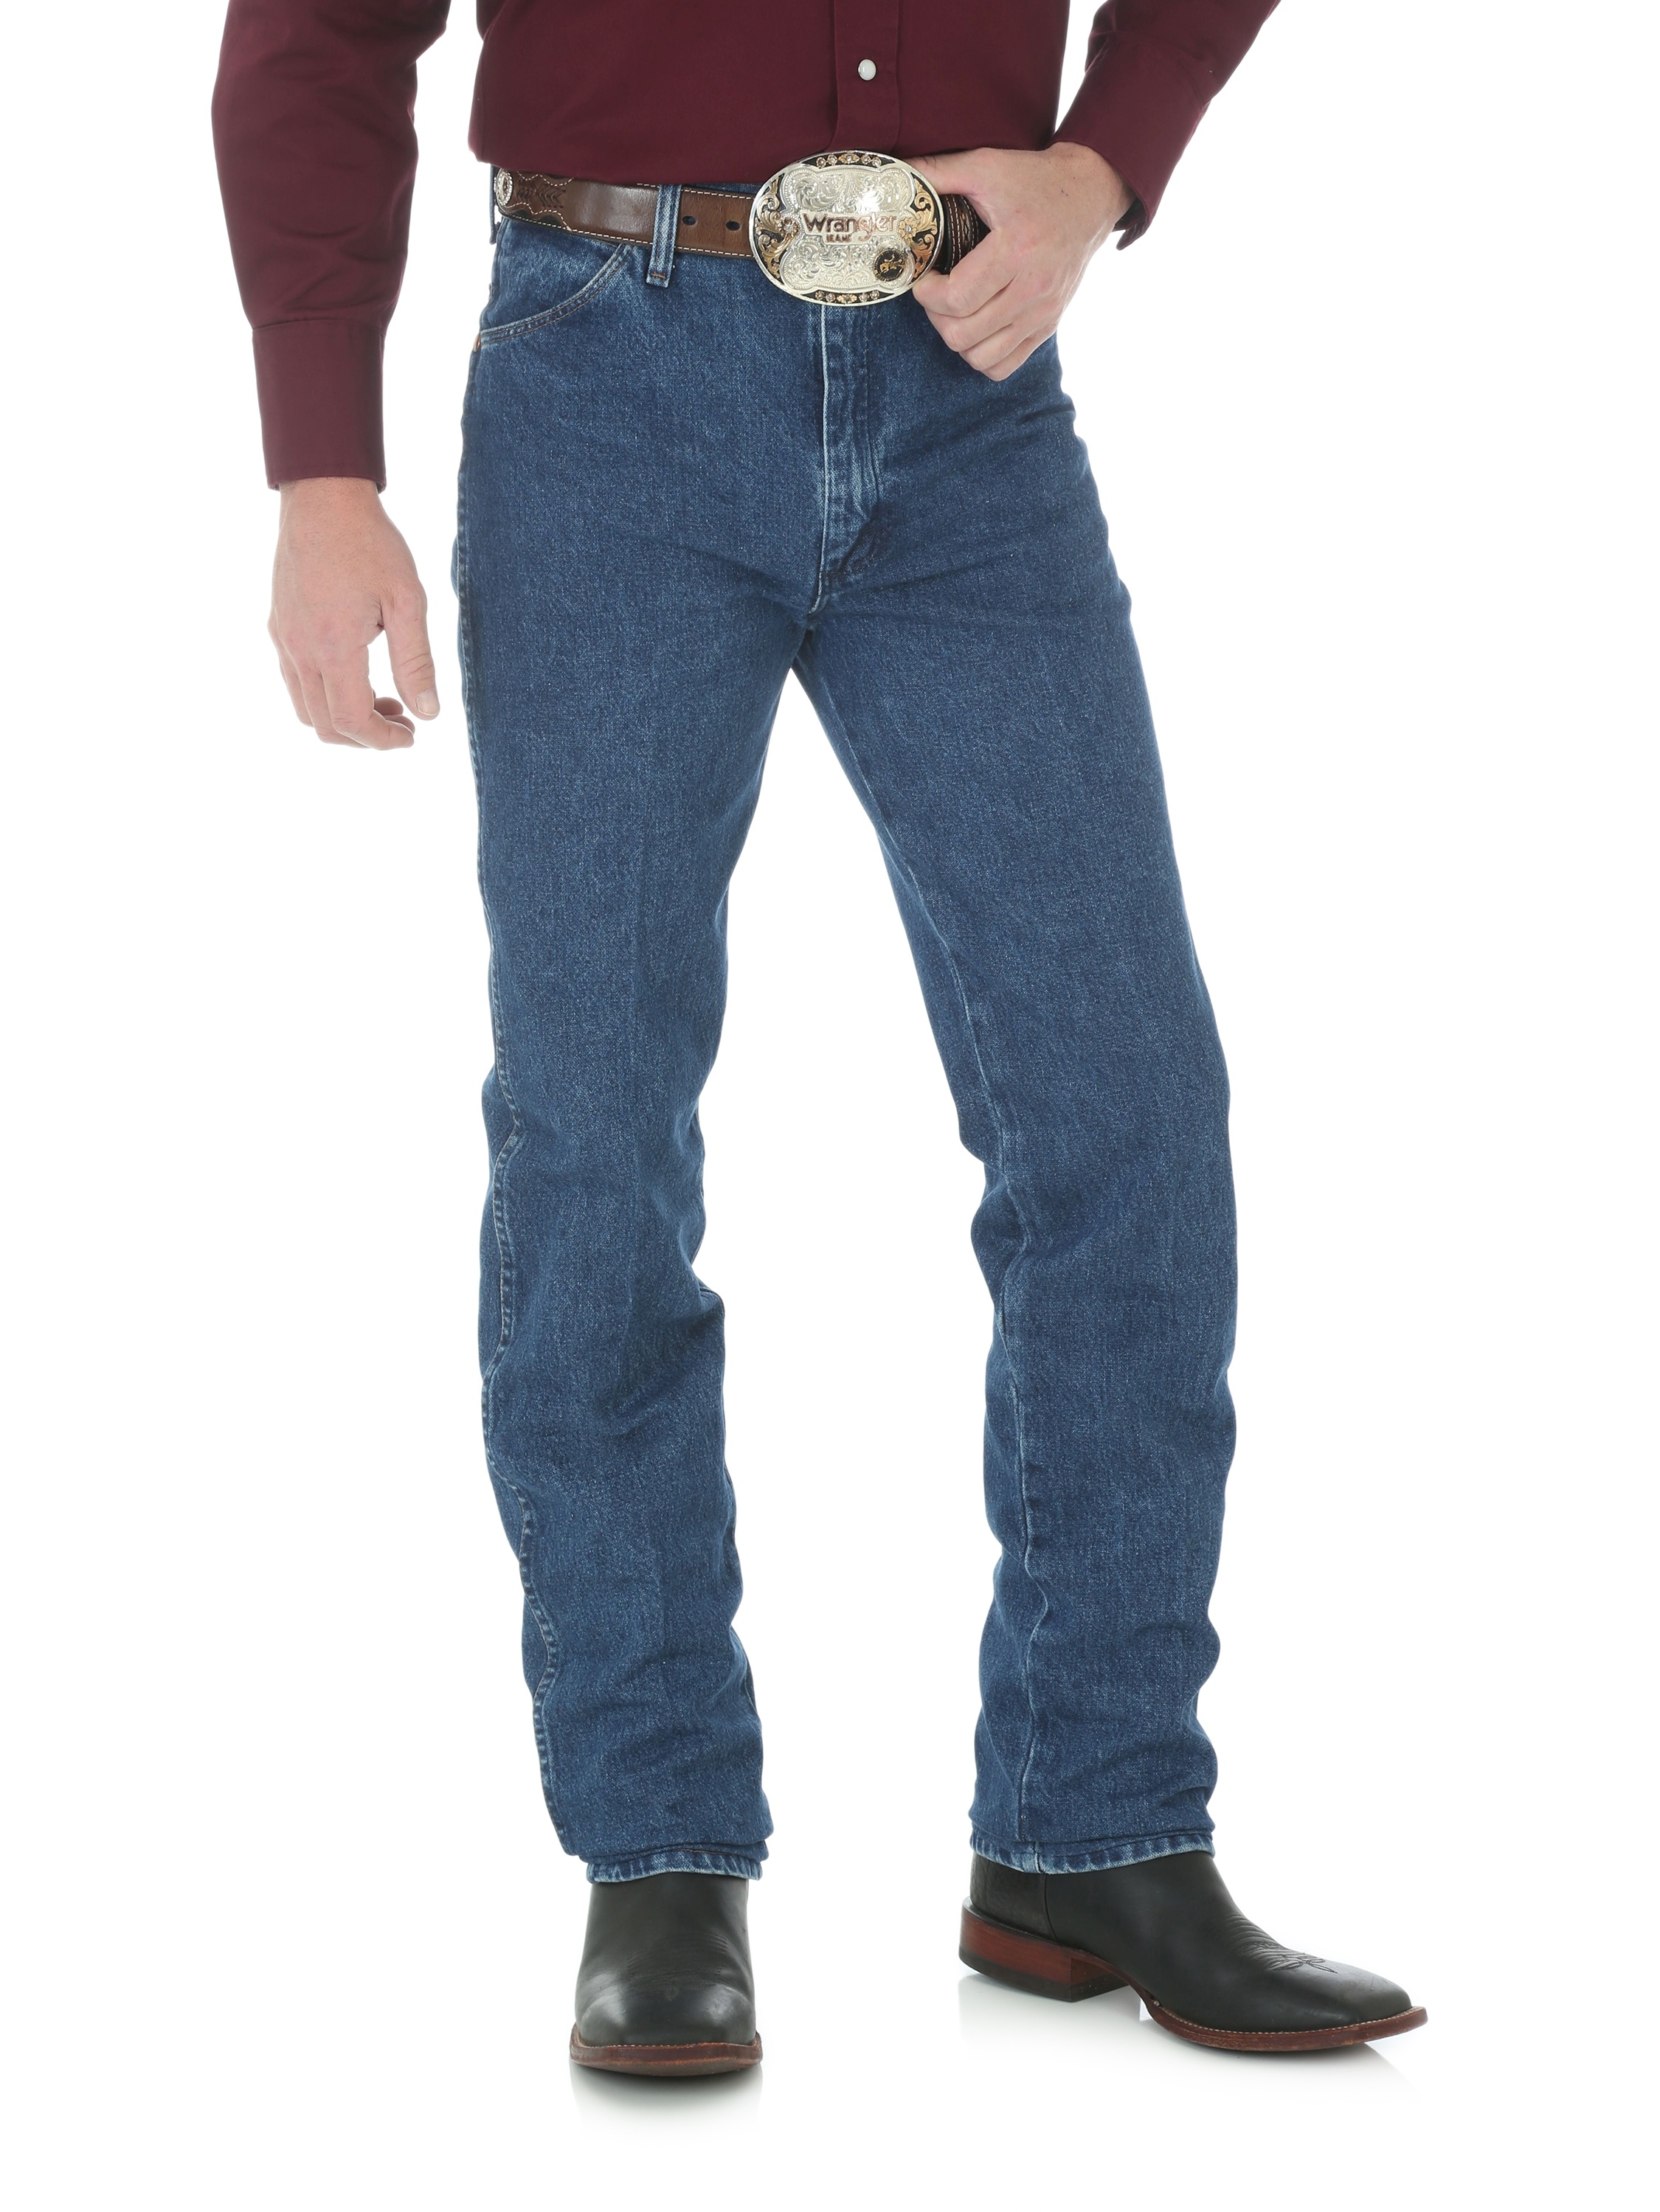 Wrangler Men's Western Cowboy Cut Slim Fit Jean - Stonewashed - image 1 of 3